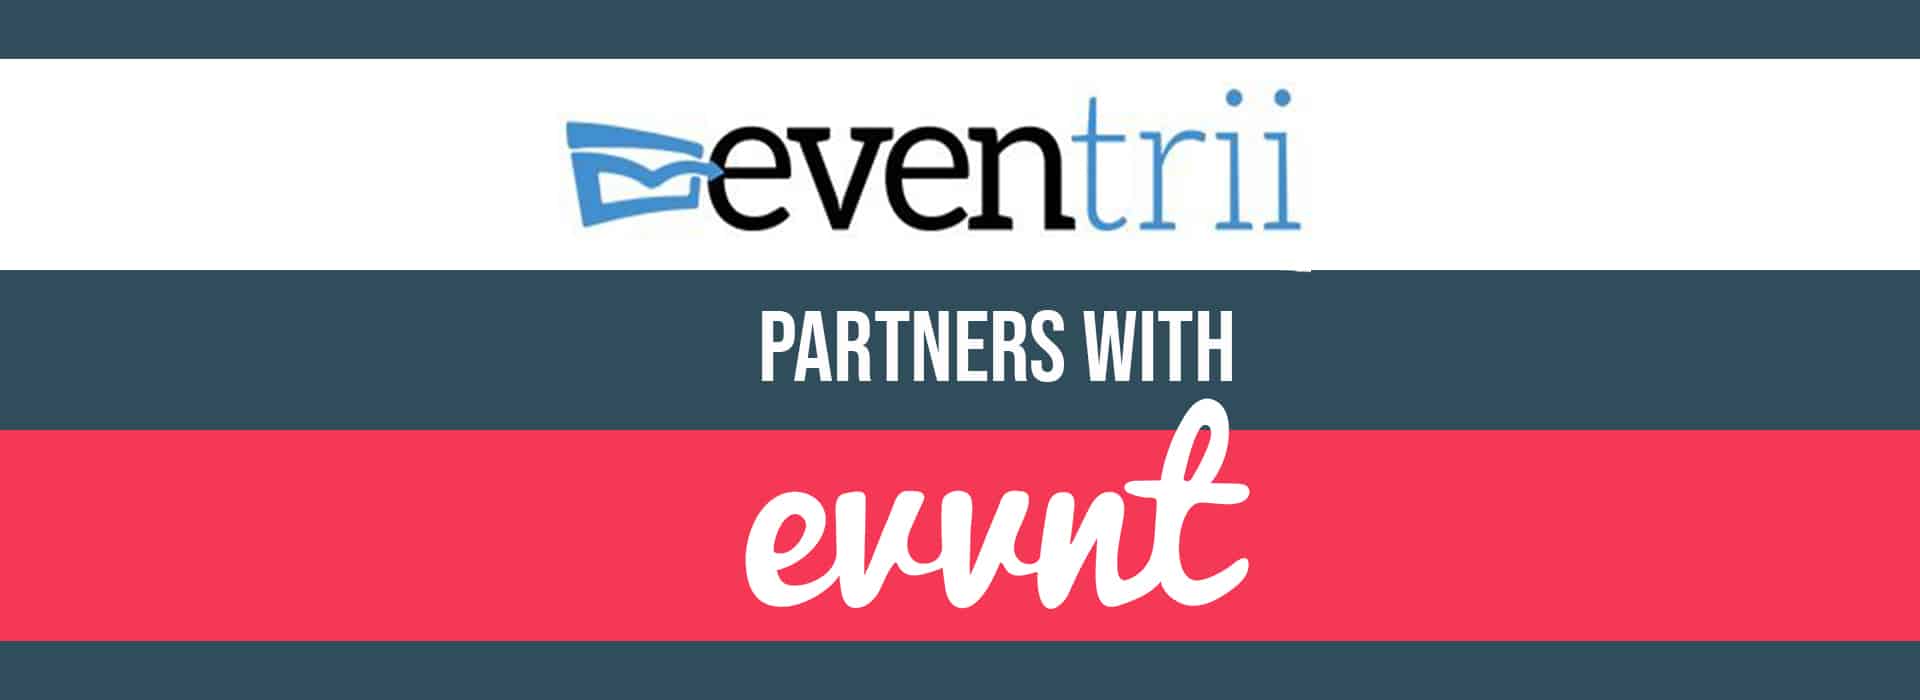 eventrii partners with evvnt